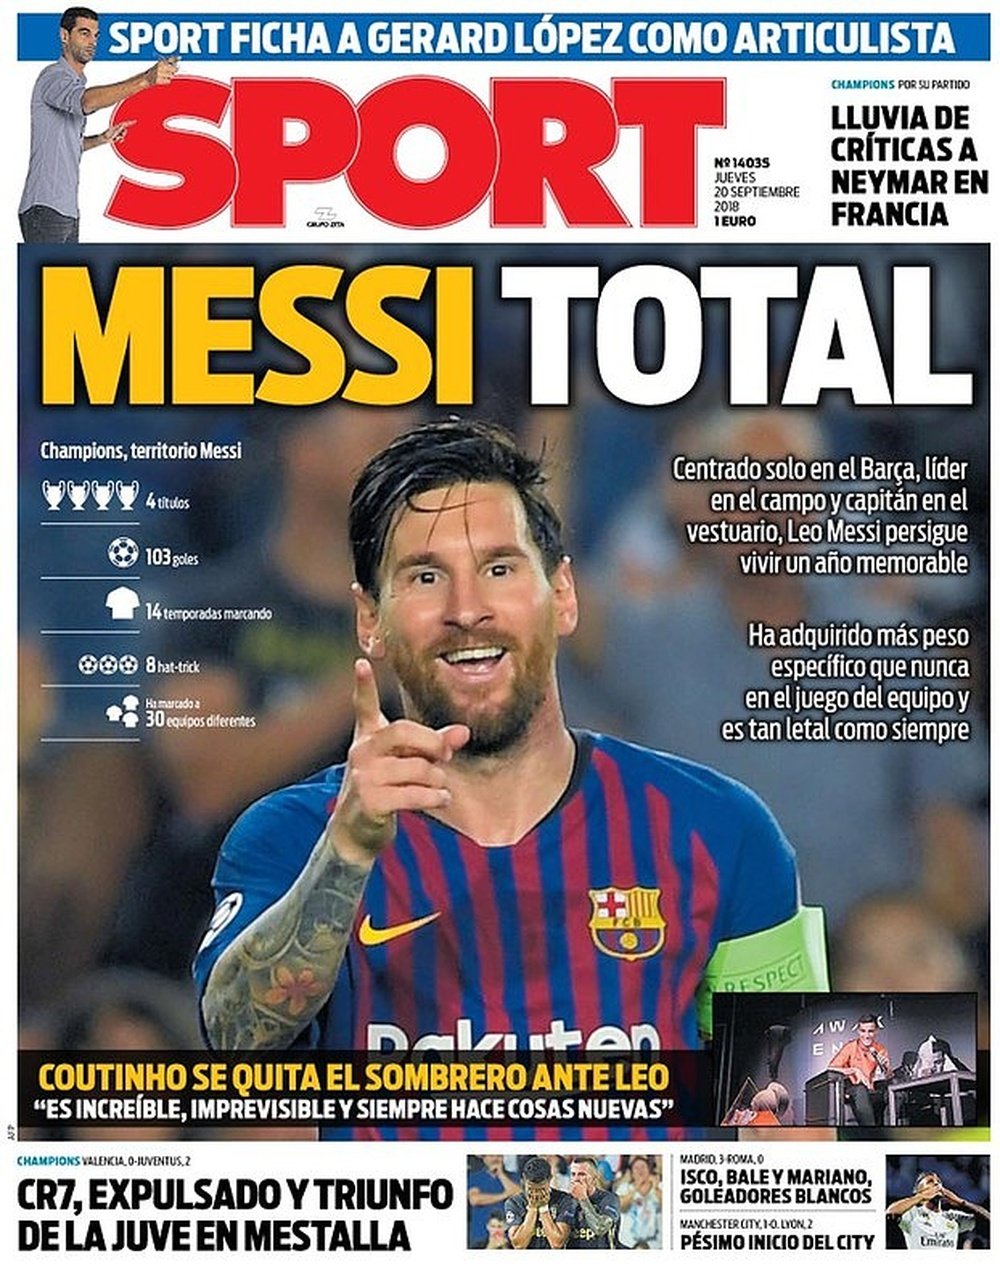 Capa do jornal 'Sport' de 20-09-18. Sport